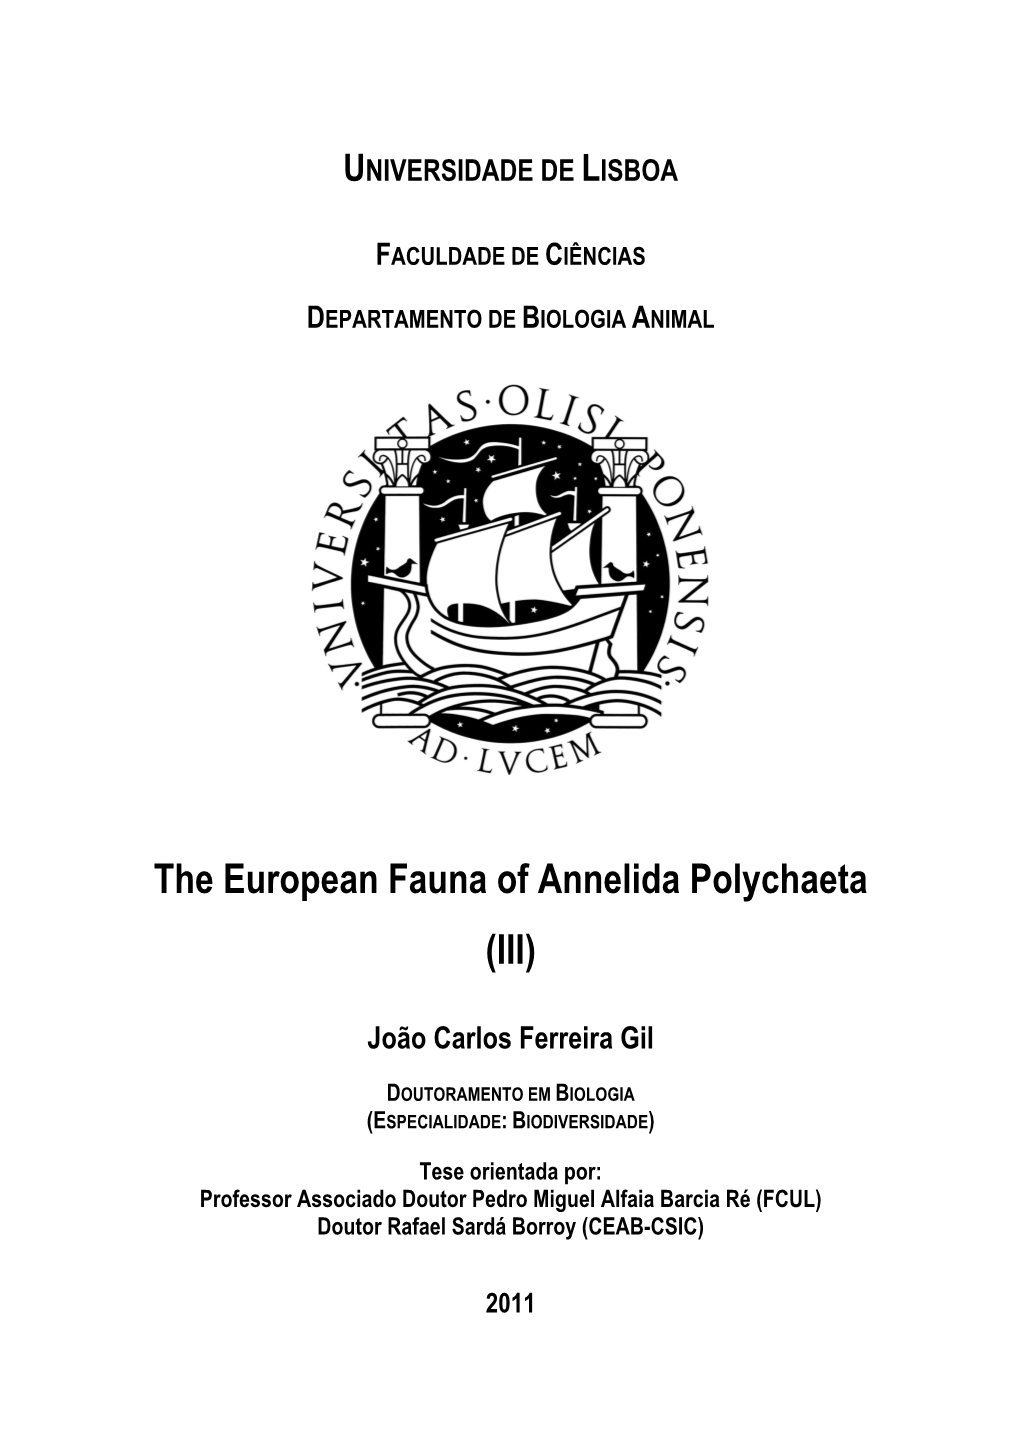 The European Fauna of Annelida Polychaeta (III)